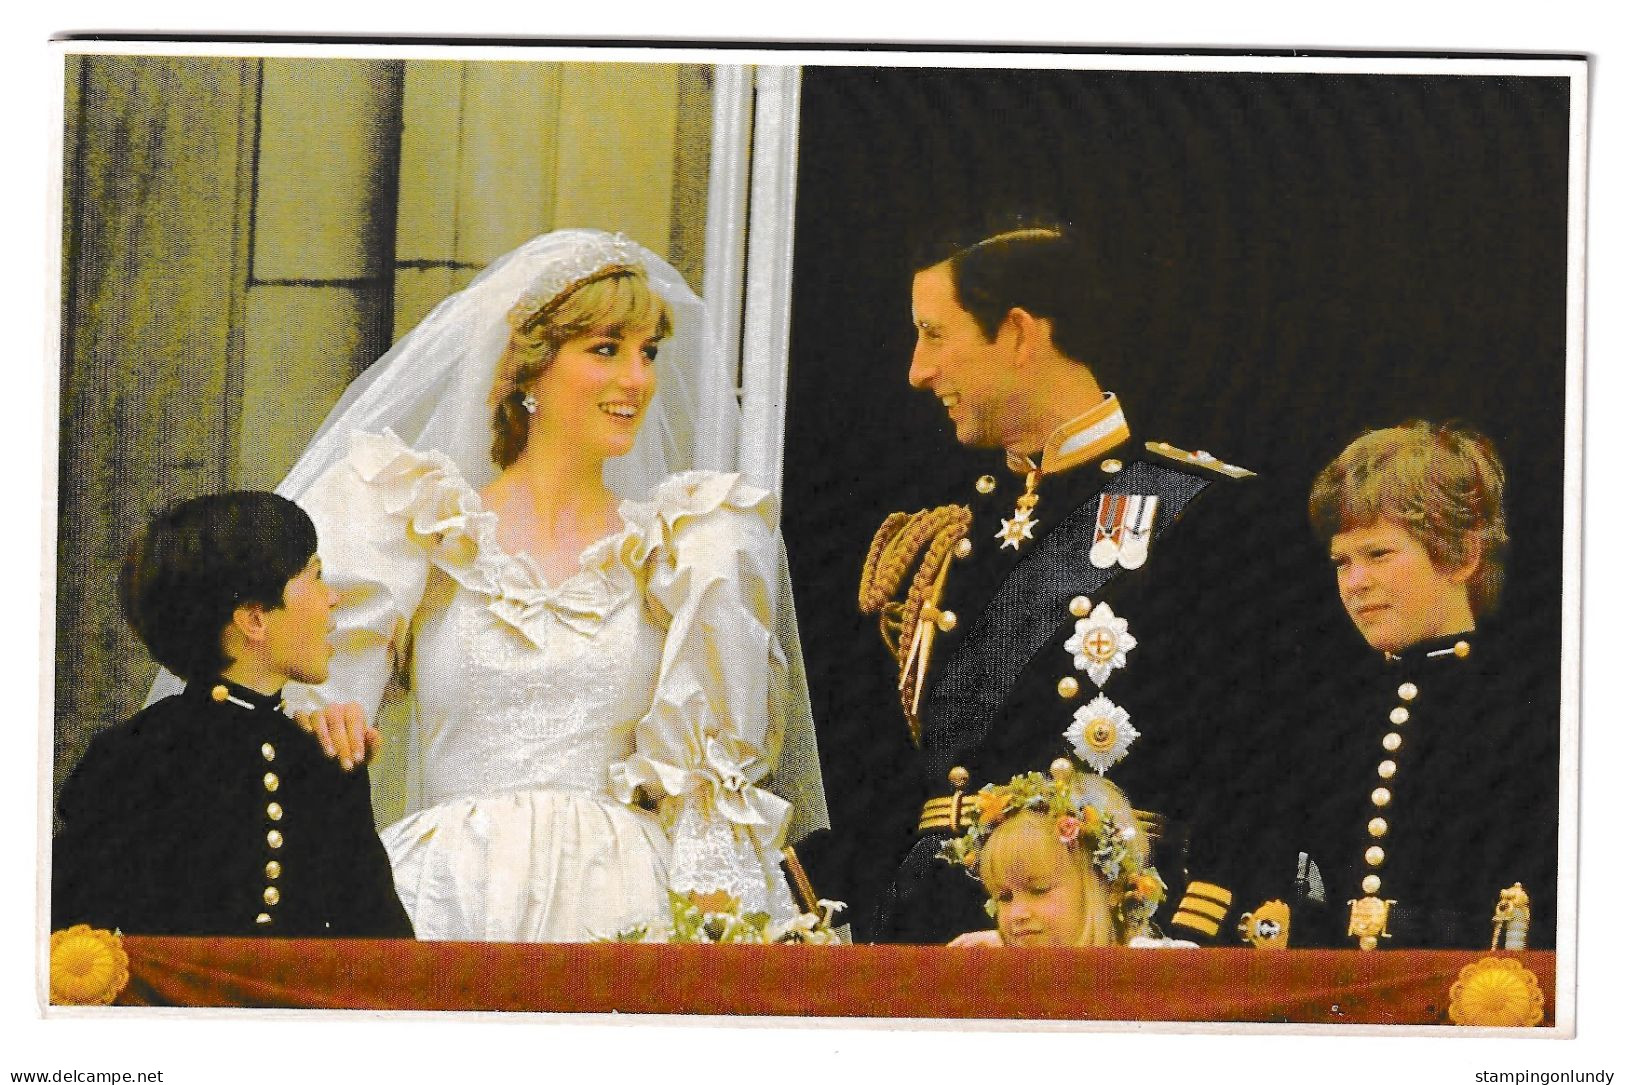 12 Postcards of Diana Princess of Wales. Retirment Sale Price Slashed!